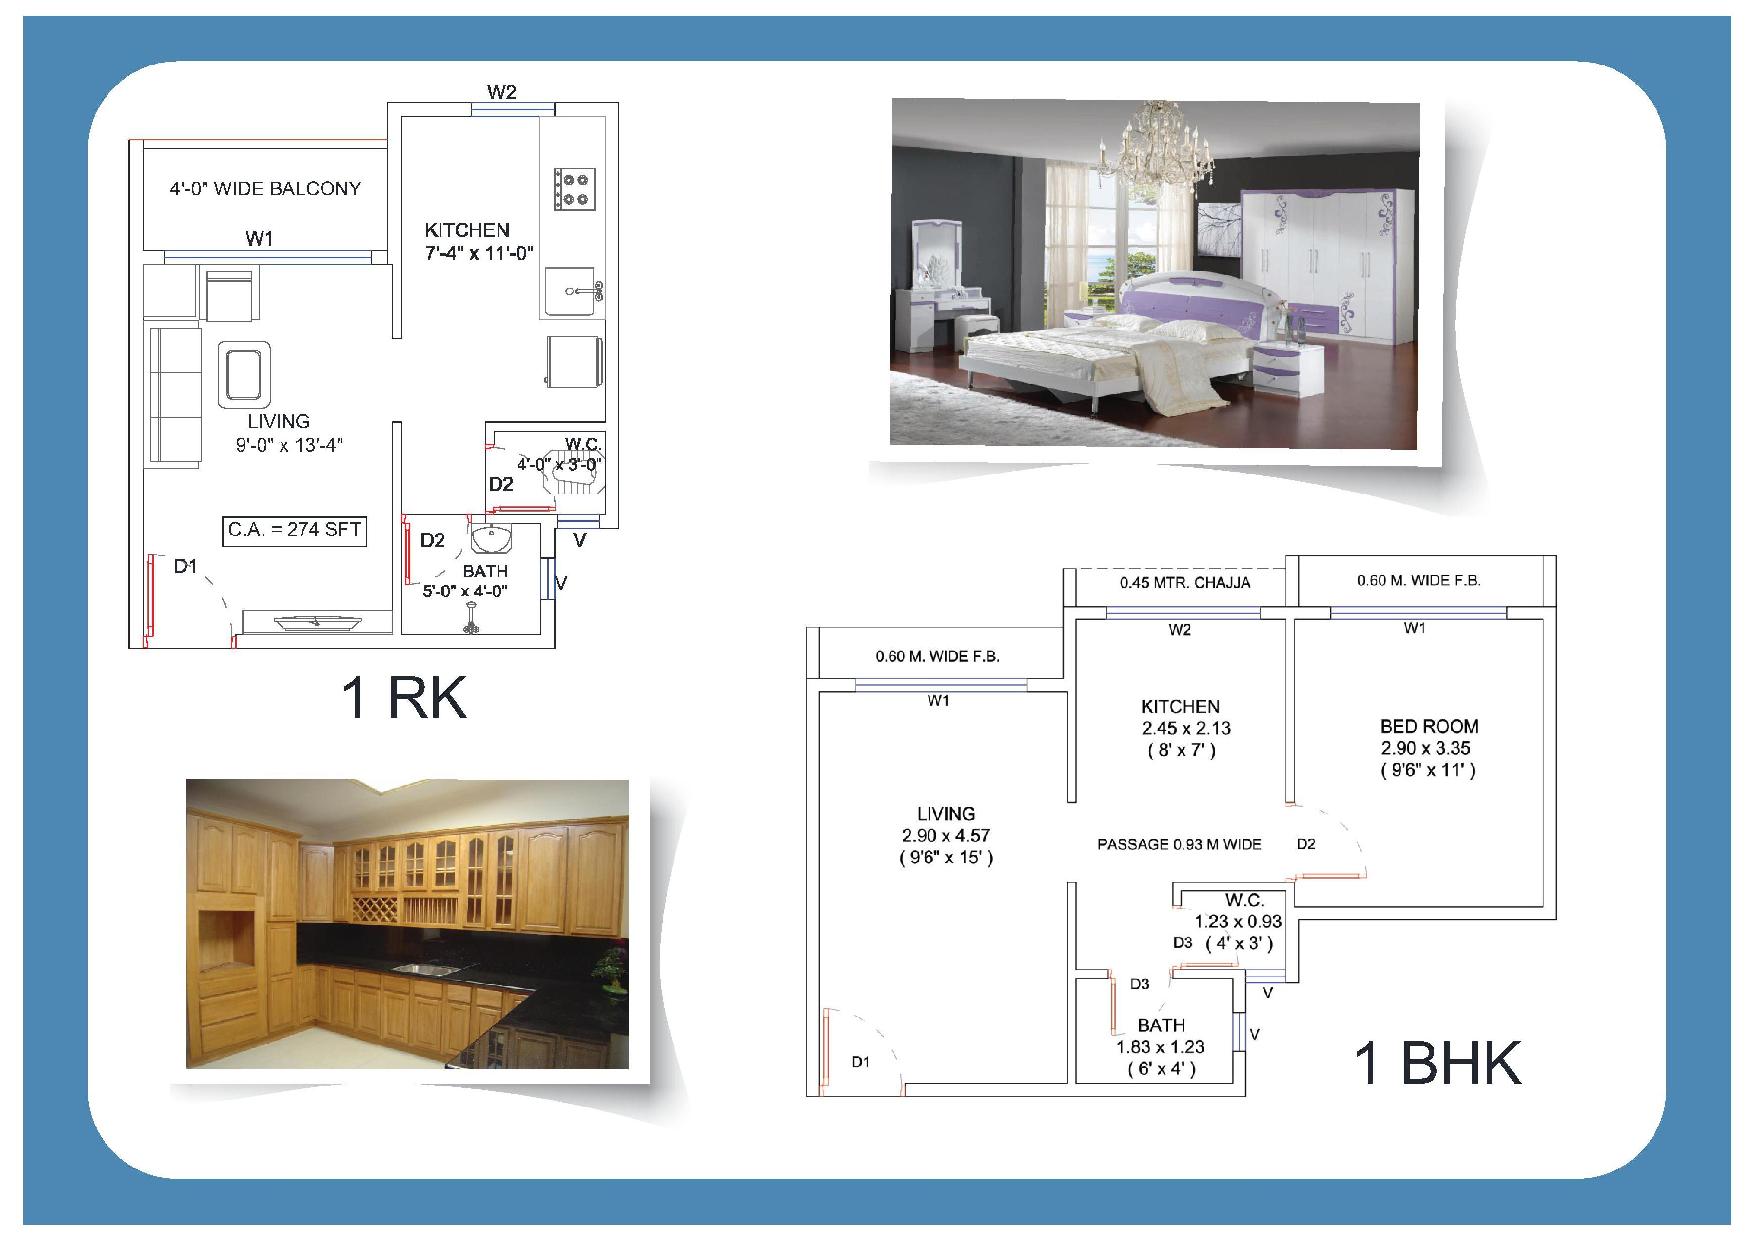 Residential Multistorey Apartment for Sale in Neev Plaza, Shop no:04, Plot no:150, Sector no:10, Taloja Panchanand Nagar, Opp Taloja Railway Station, Navi Mumbai - 410208. , Taloja-West, Mumbai